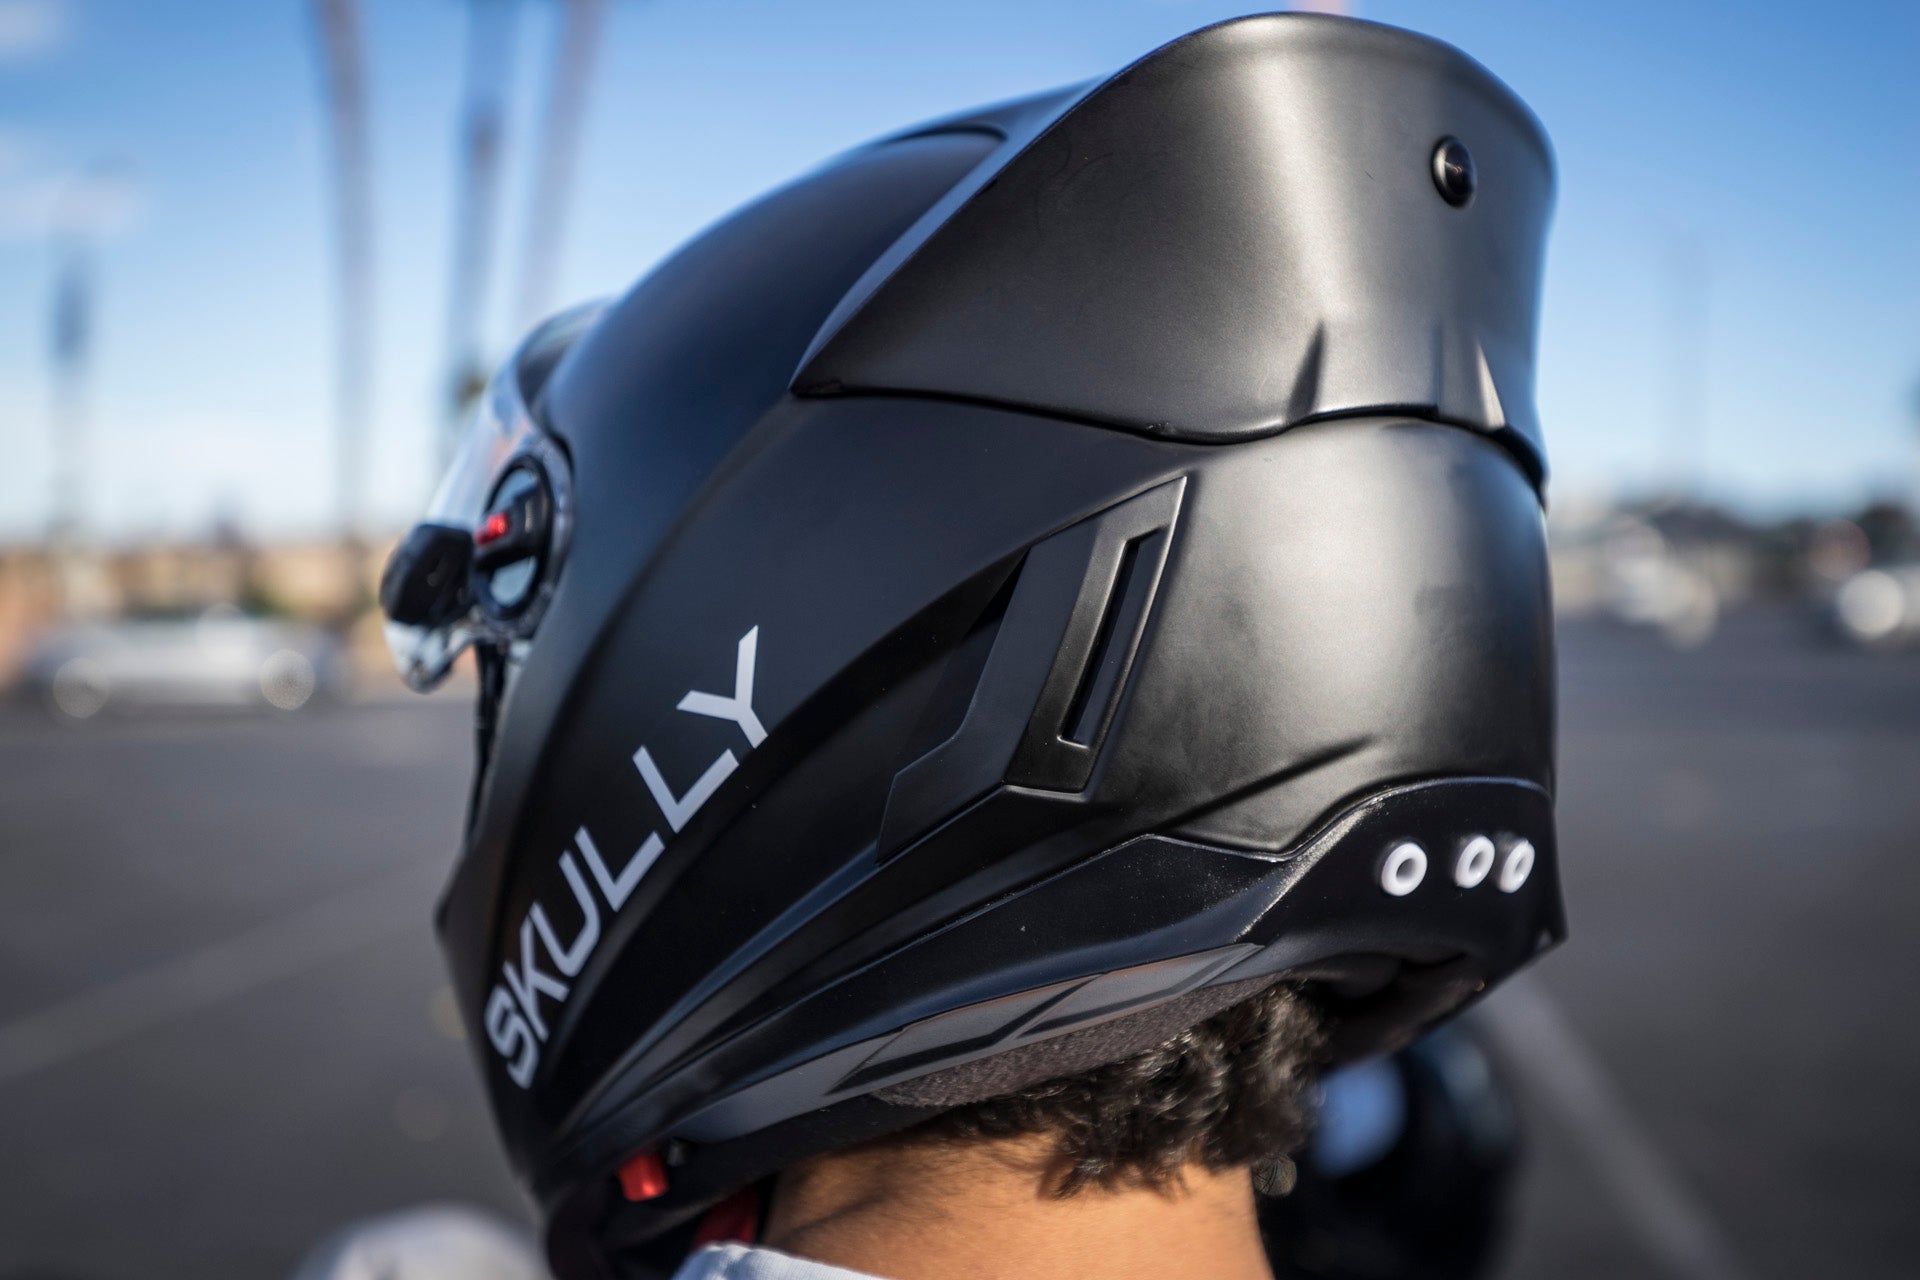 Skully AR-1 Helmet Hands-On: The World's First HUD Motorcycle Helmet | Gizmodo Australia